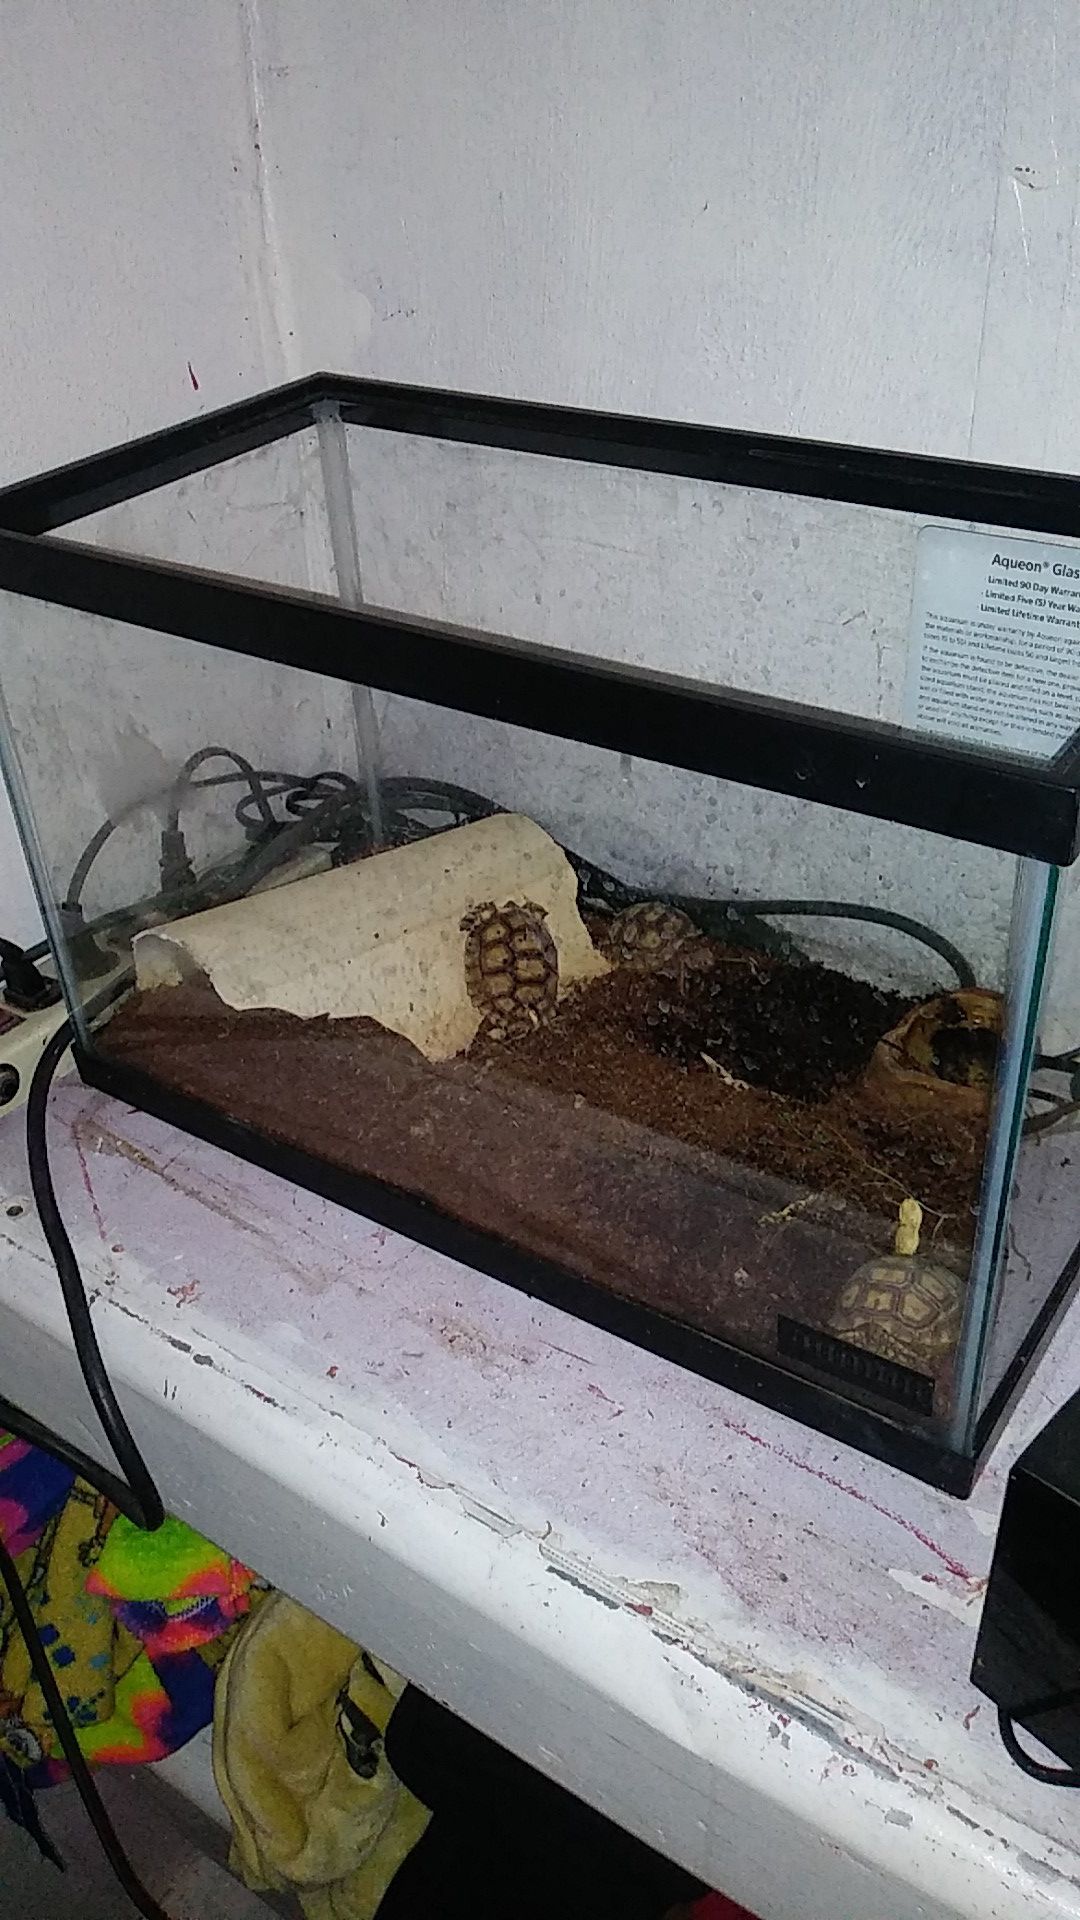 3 baby salcata tortoises tank and set up.